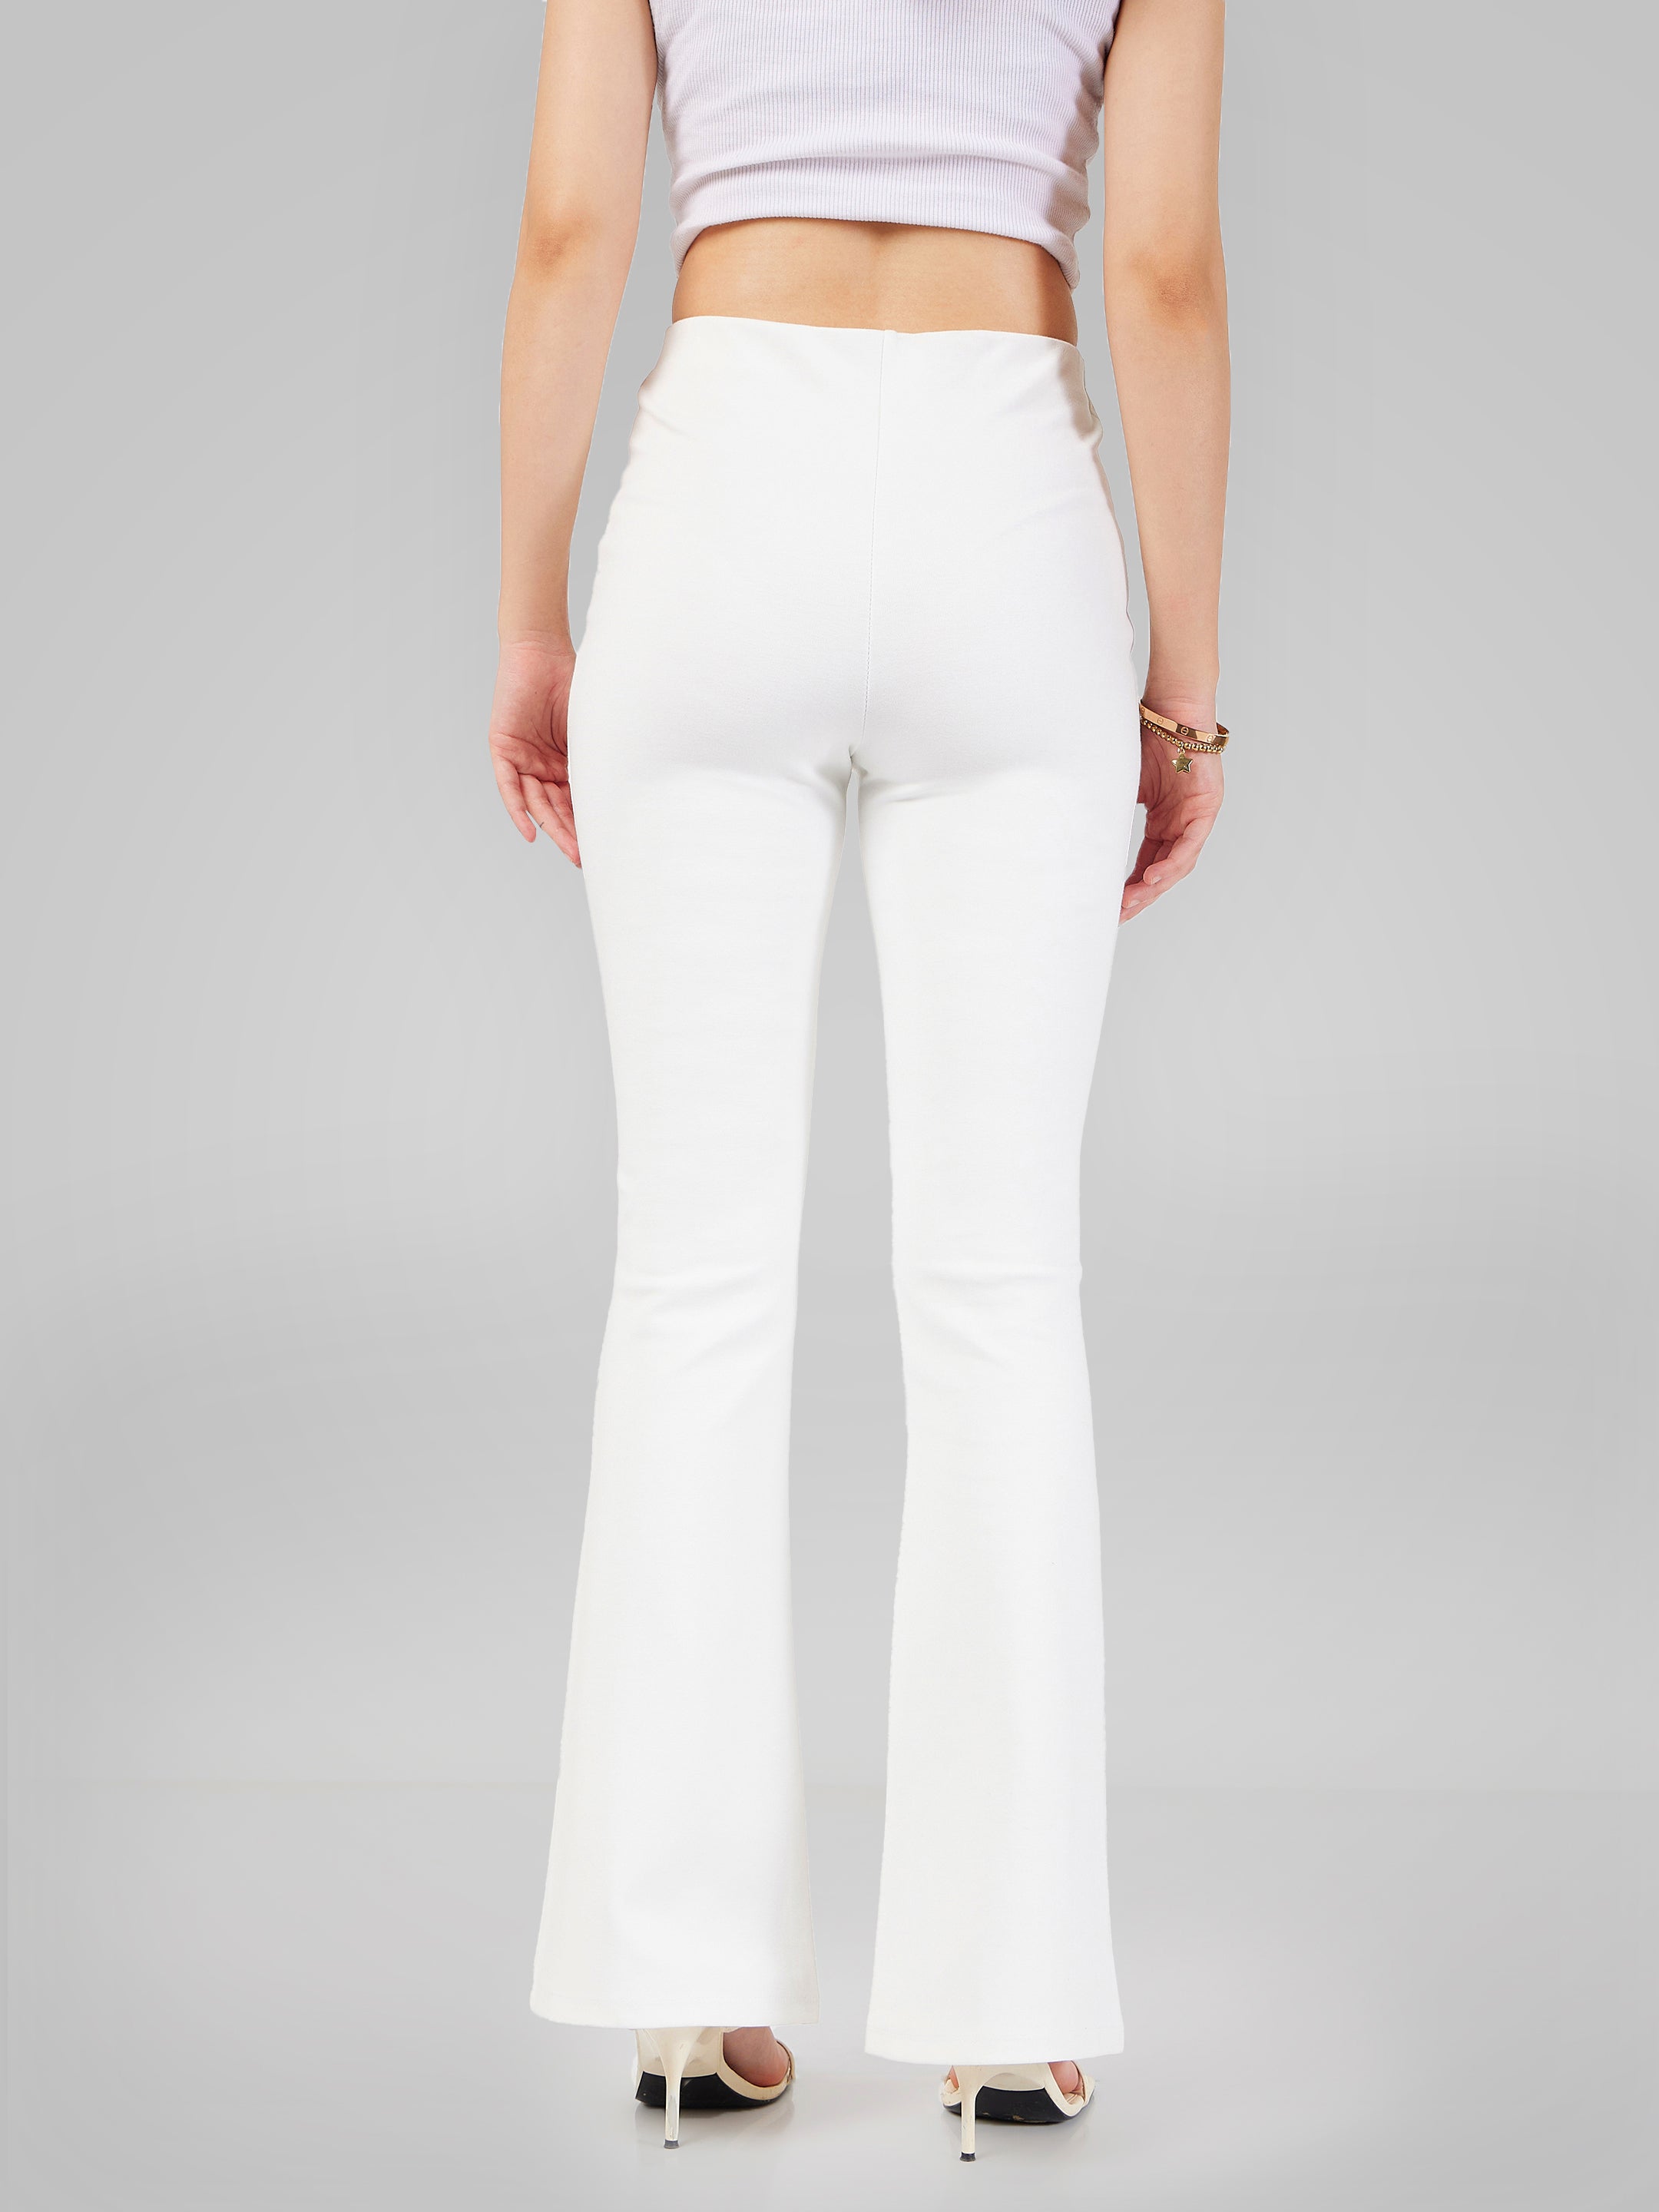 Women's White Bell Bottom 4-Way Stretch Pants - Lyush